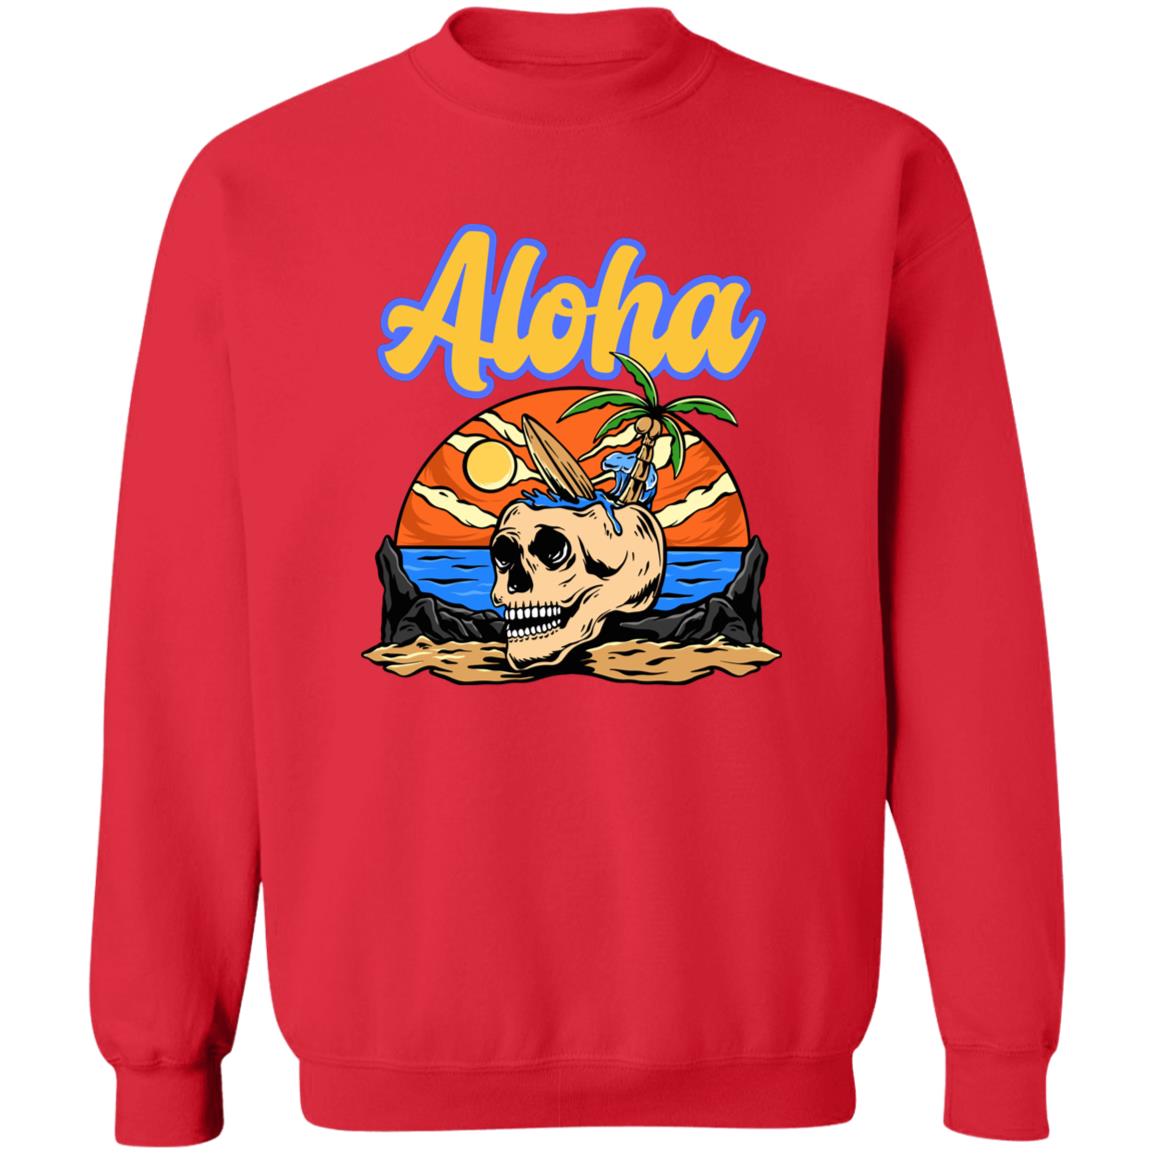 Aloha Surfer Sweatshirt, Beach Lover Hawaii Aloha Sweatshirt, Beach Skull Palm Trees Surfboard Sweatshirt